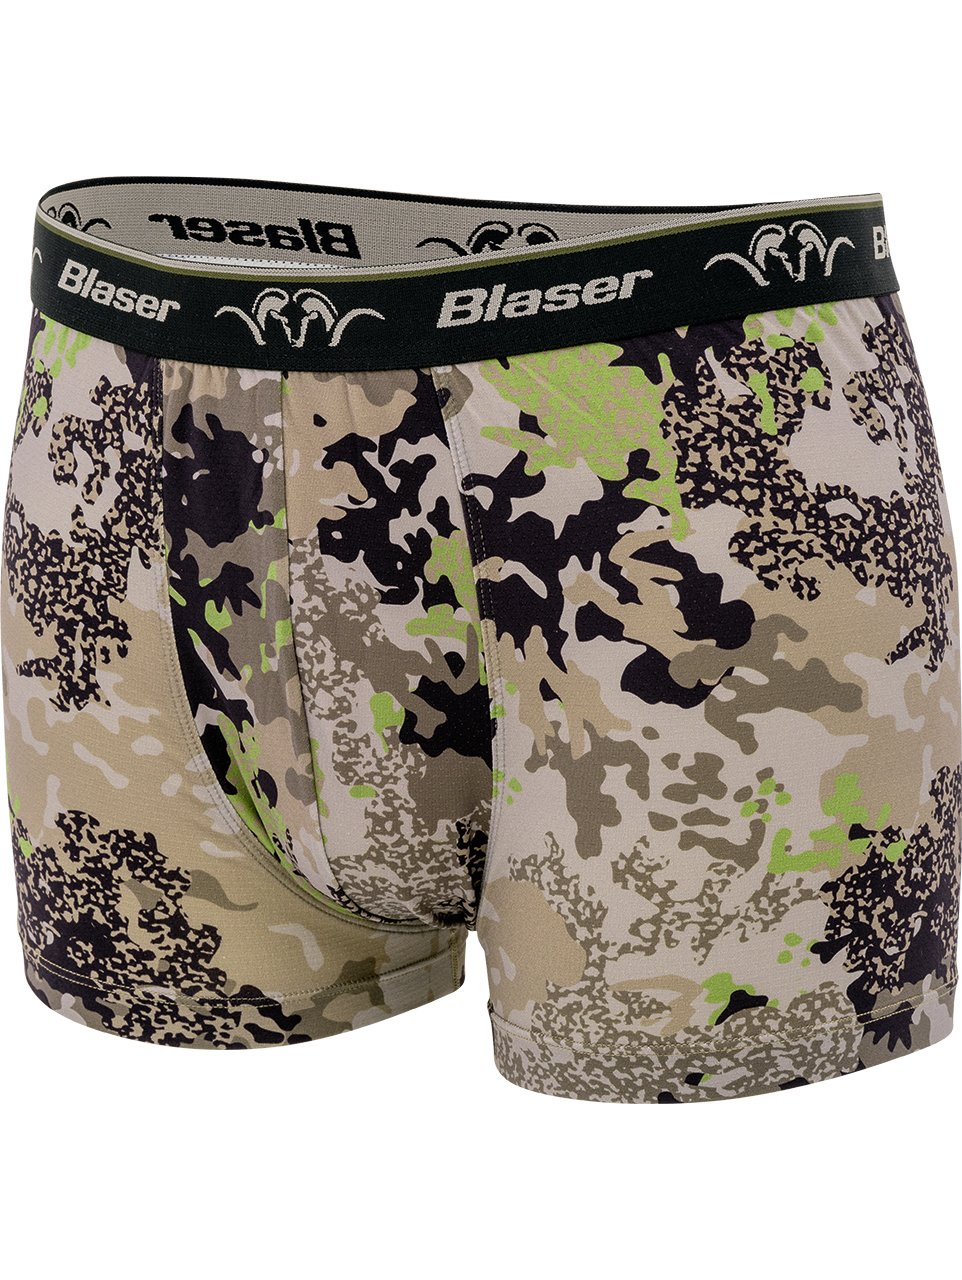 Image of Blaser Magnum 2.0 Boxer Shorts - HunTec Camouflage